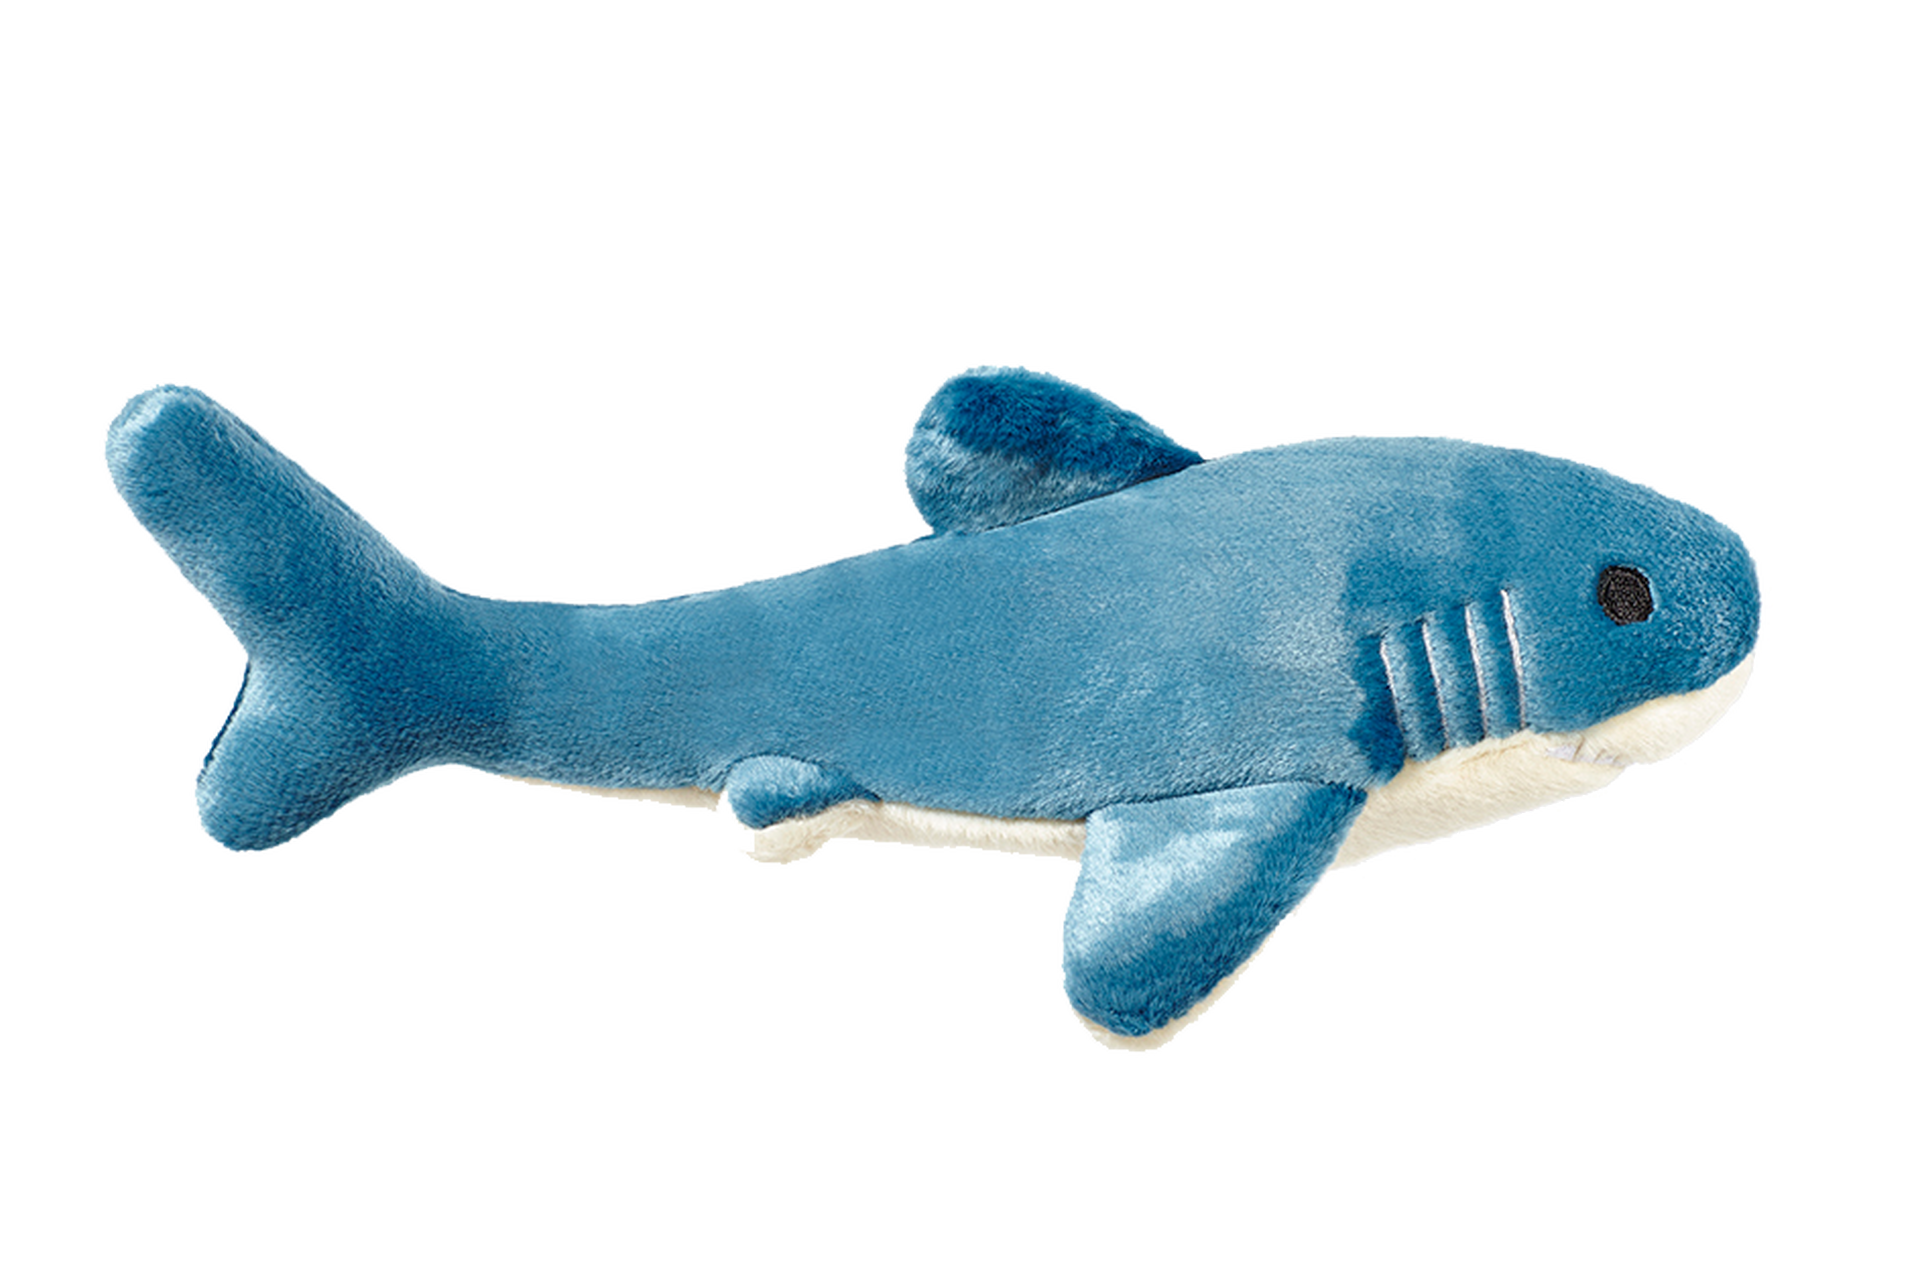 Tank the Shark Plush Toy